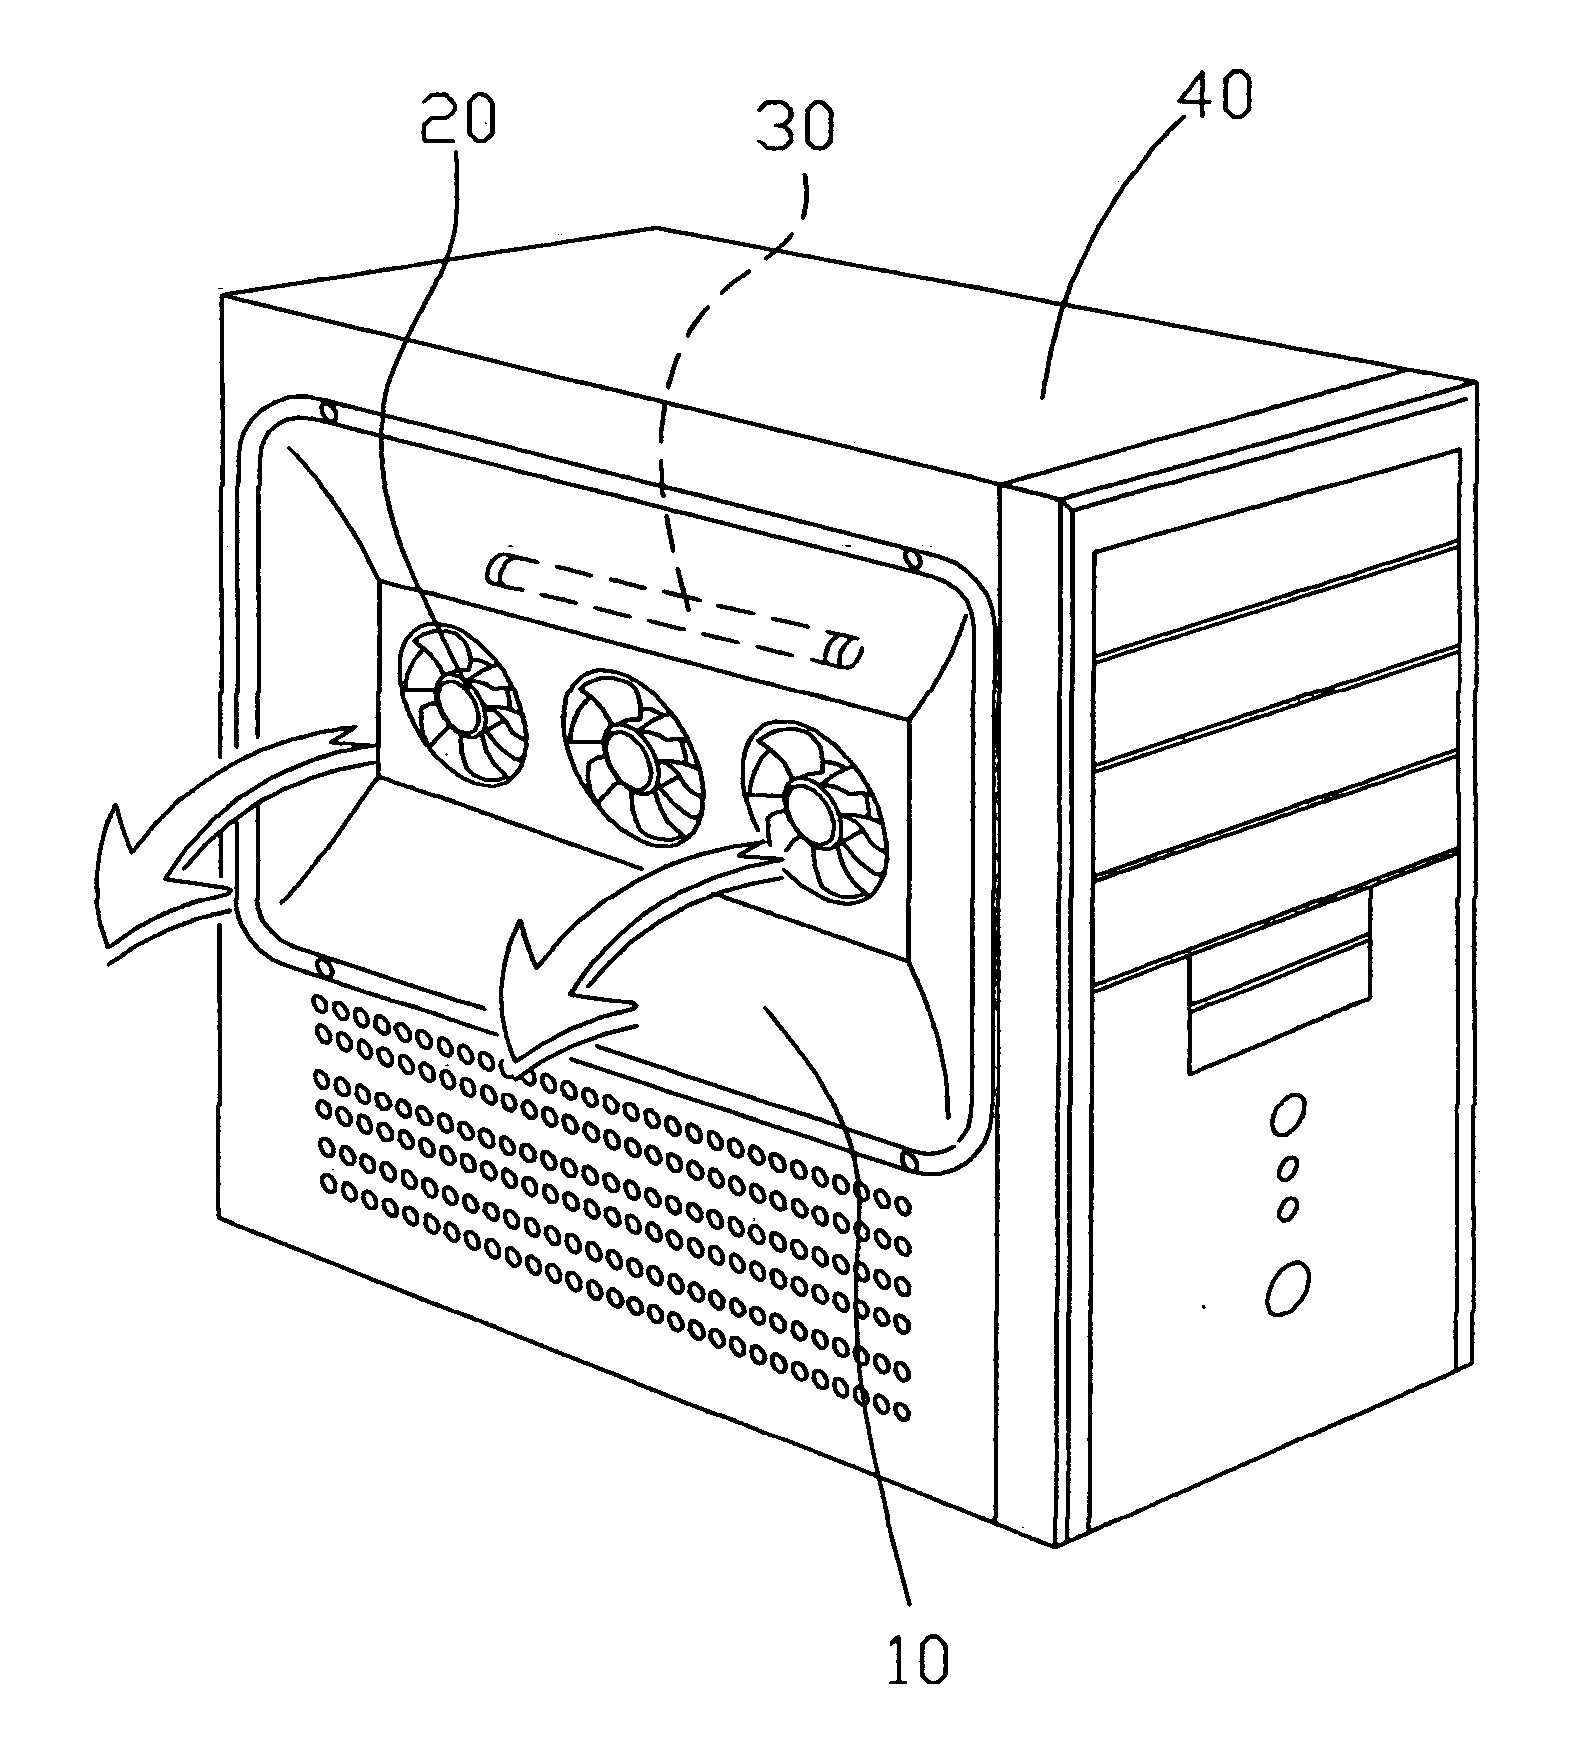 Radiator module with sterilizing device